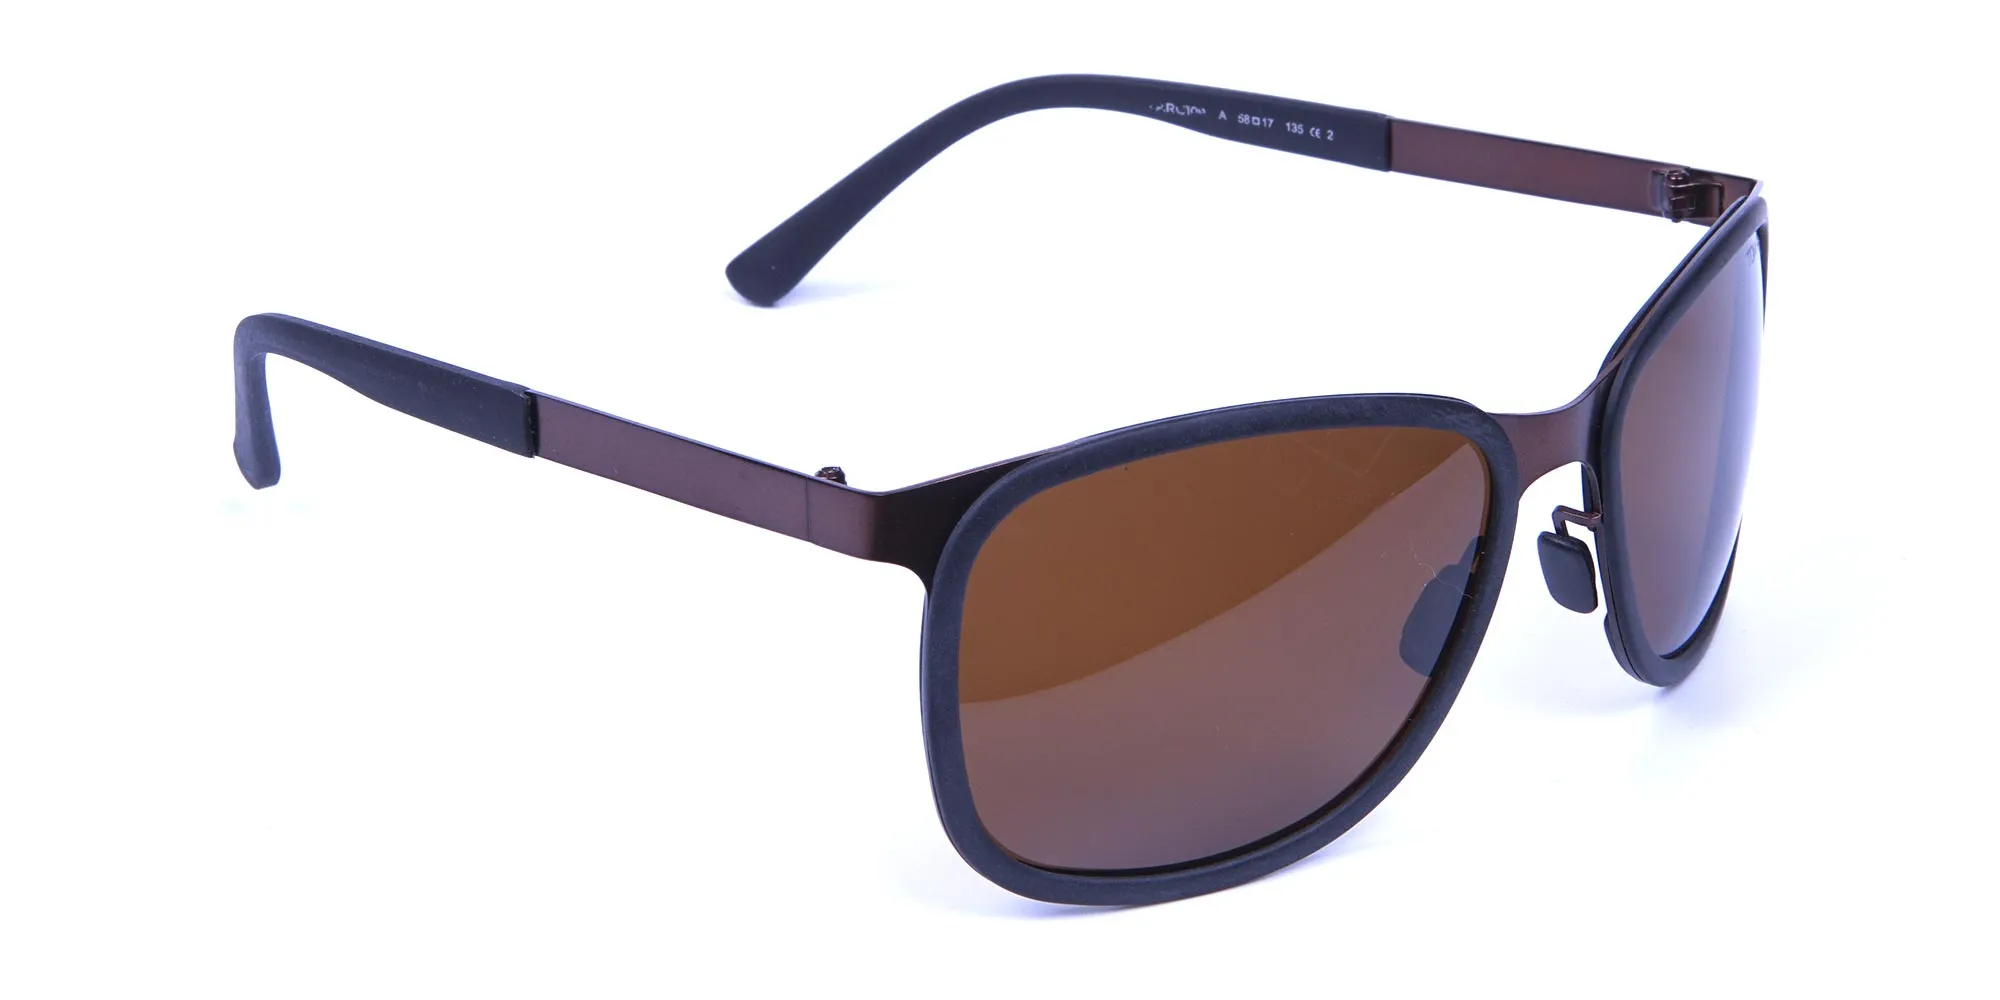 Luxury All Brown Sunglasses -1